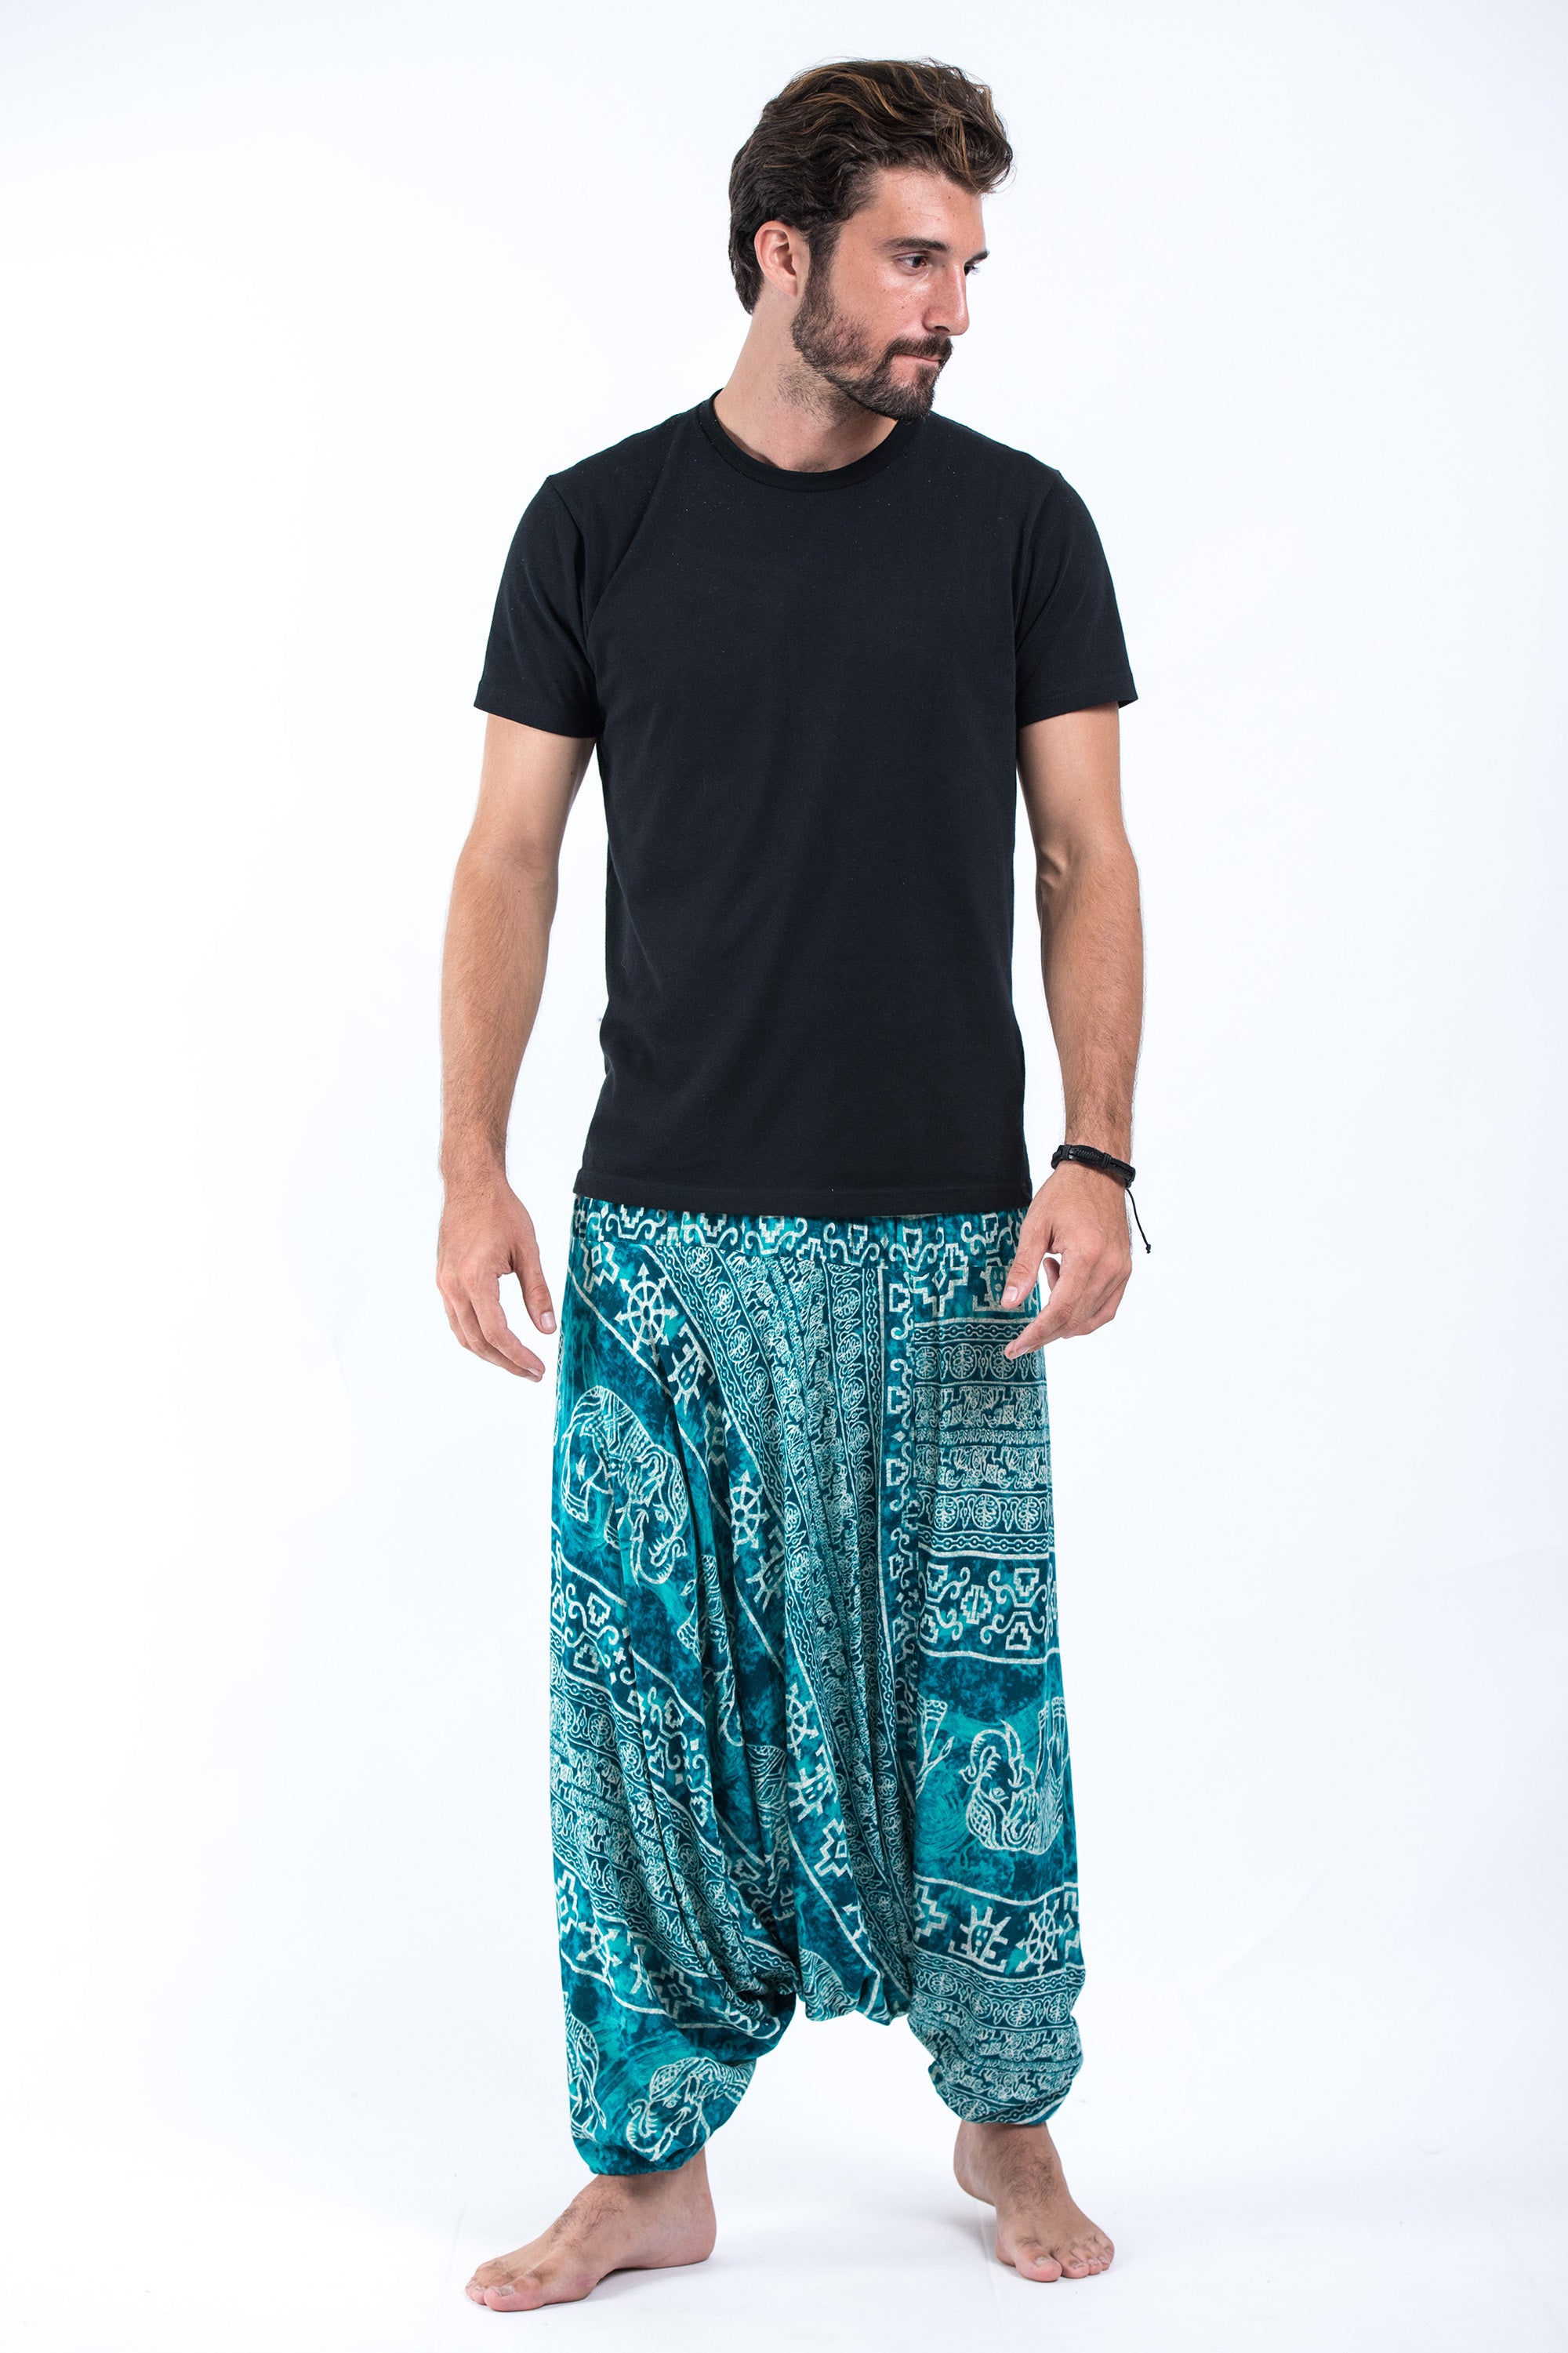 Marble Elephant Drop Crotch Men's Elephant Pants in Turquoise – Harem Pants